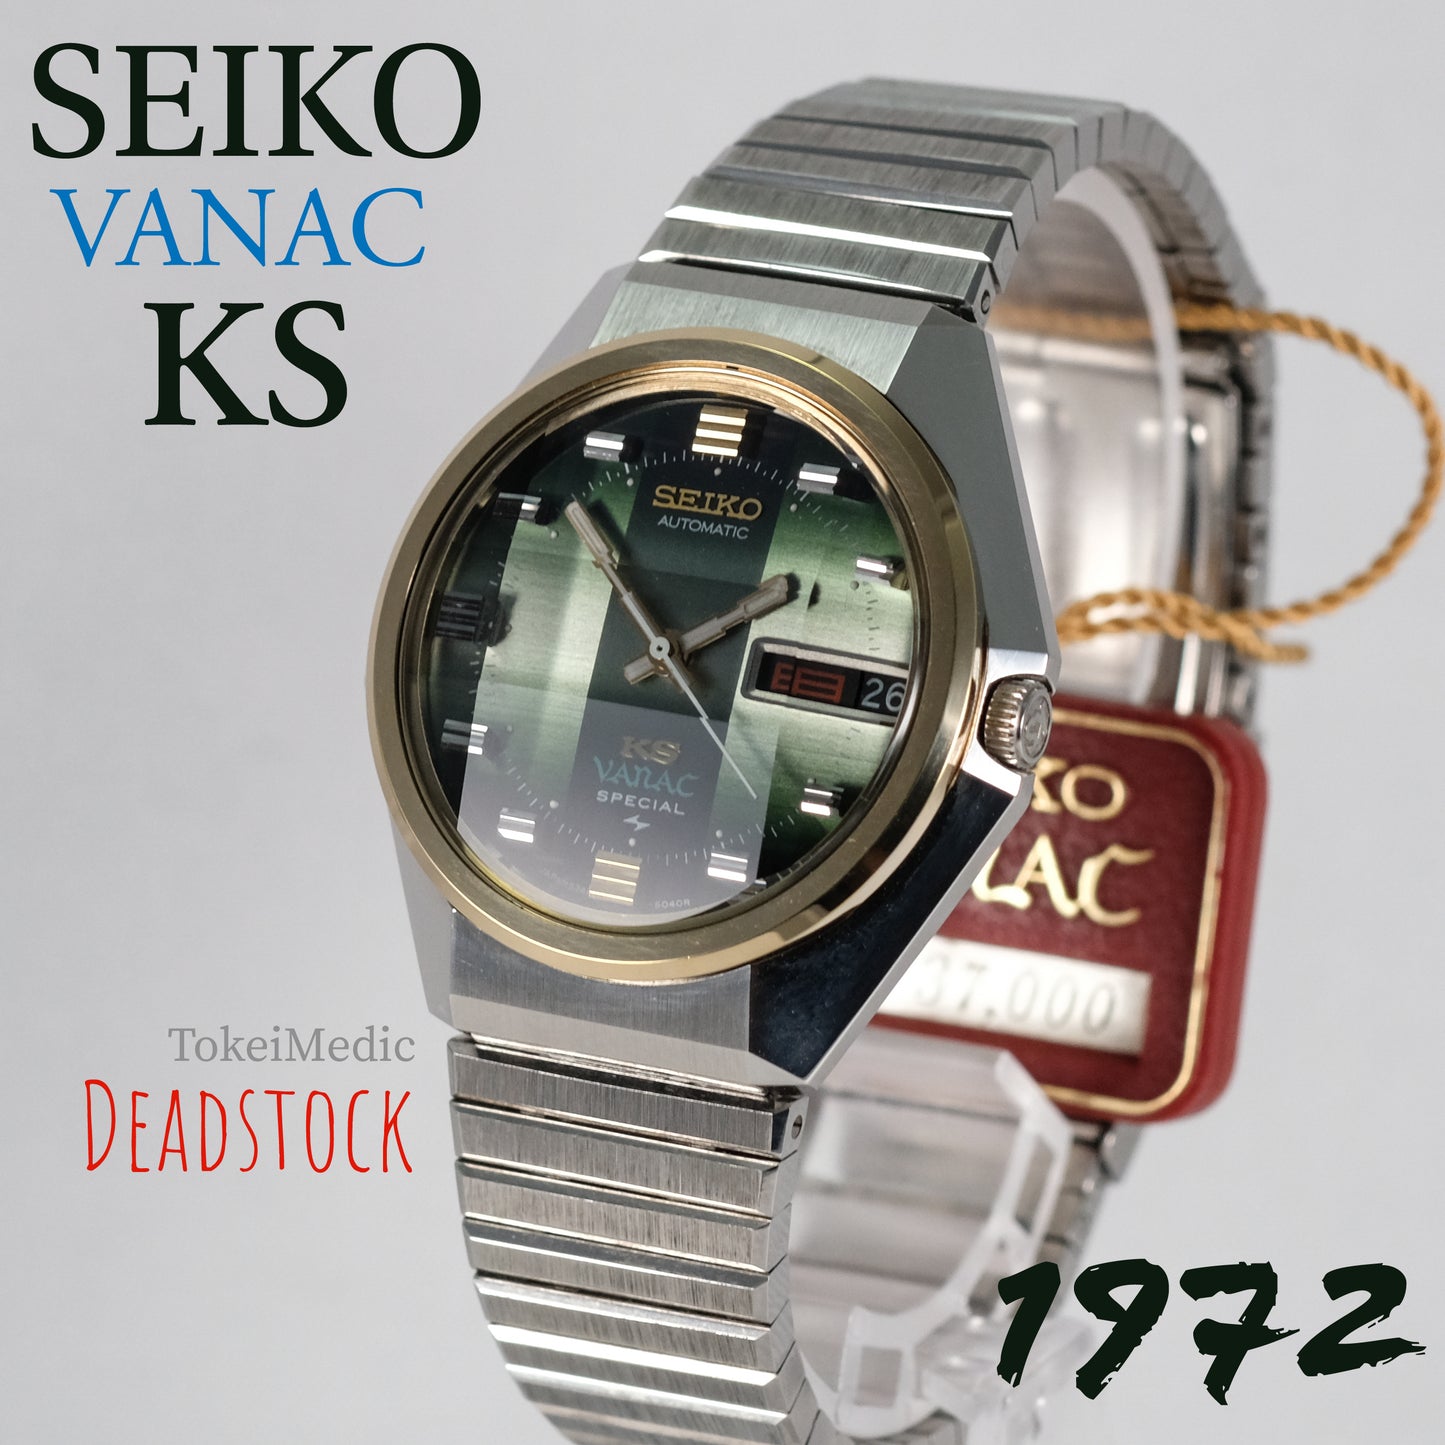 1972 Seiko KS Vanac Special 5246-6030